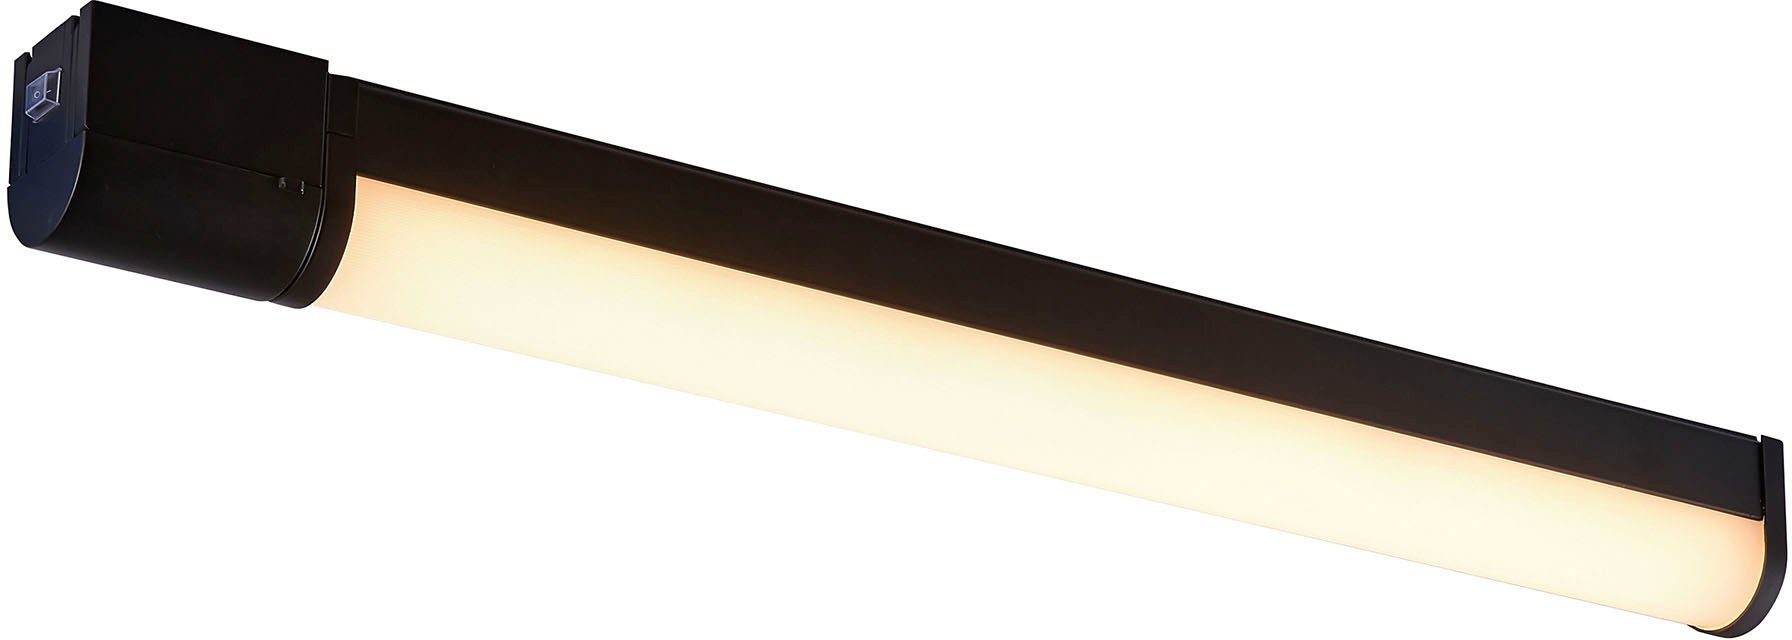 Nordlux LED Unterbauleuchte Malaika 68, LED fest integriert, Warmweiß